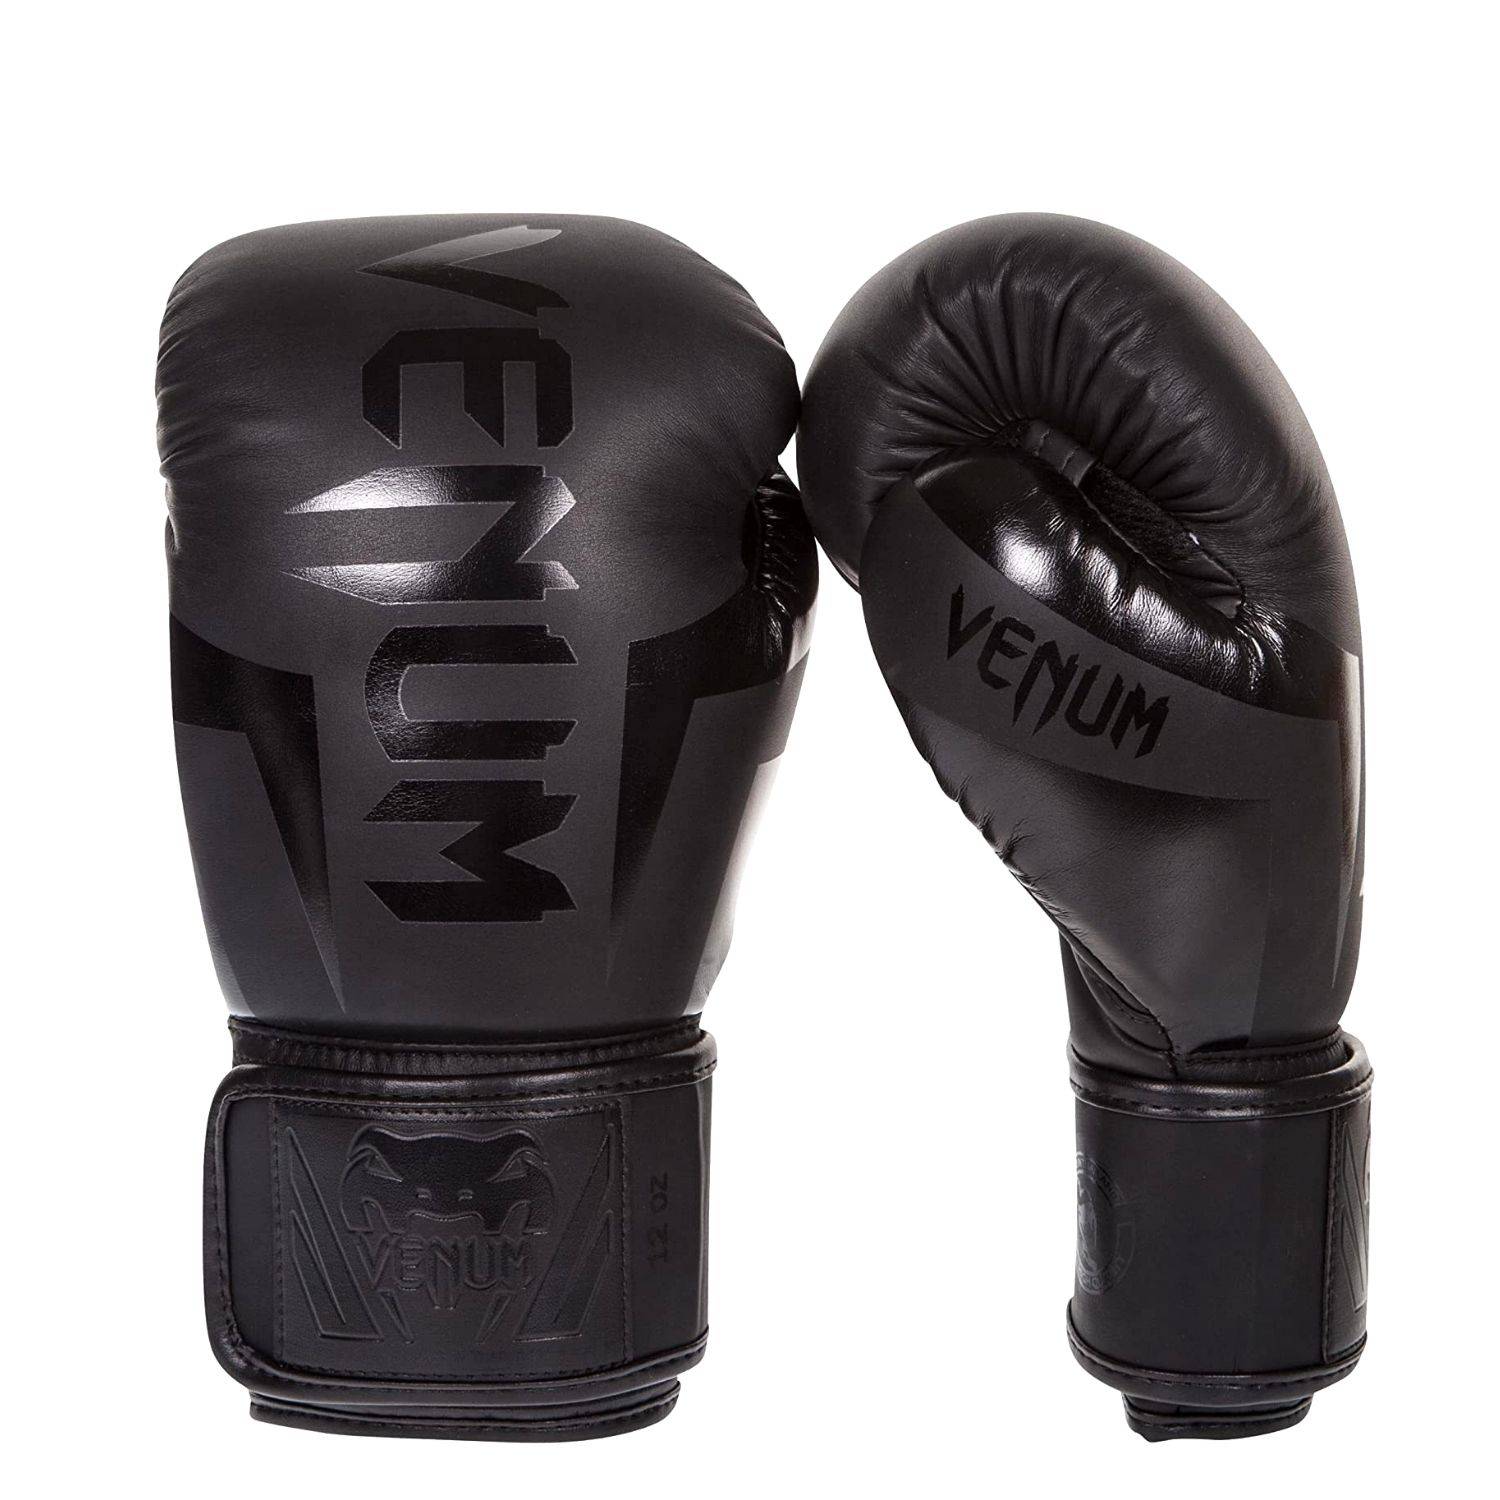 Guantes boxeo Venum| guantes abarth Venum| tienda Venum| Onzas 14 oz